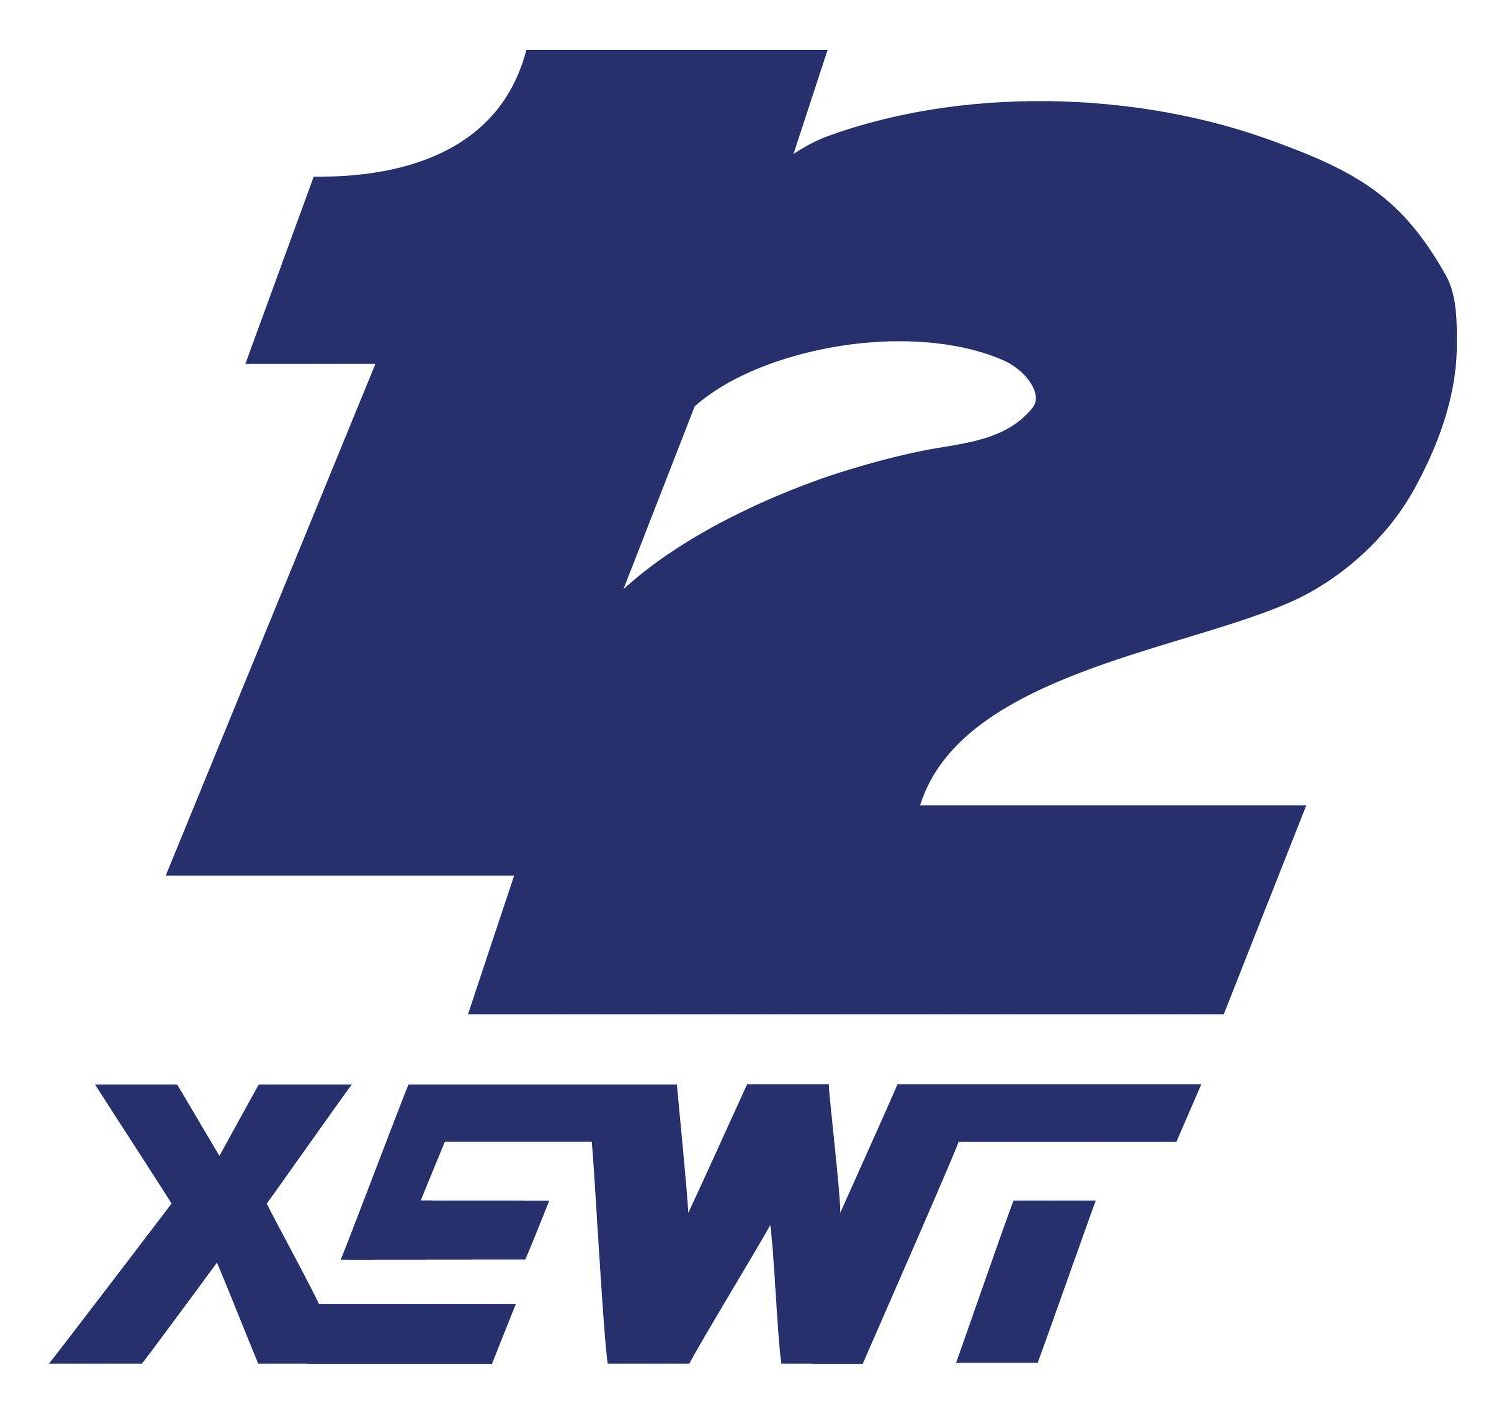 Tijuana Logo - XEWT-TV | Logopedia | FANDOM powered by Wikia